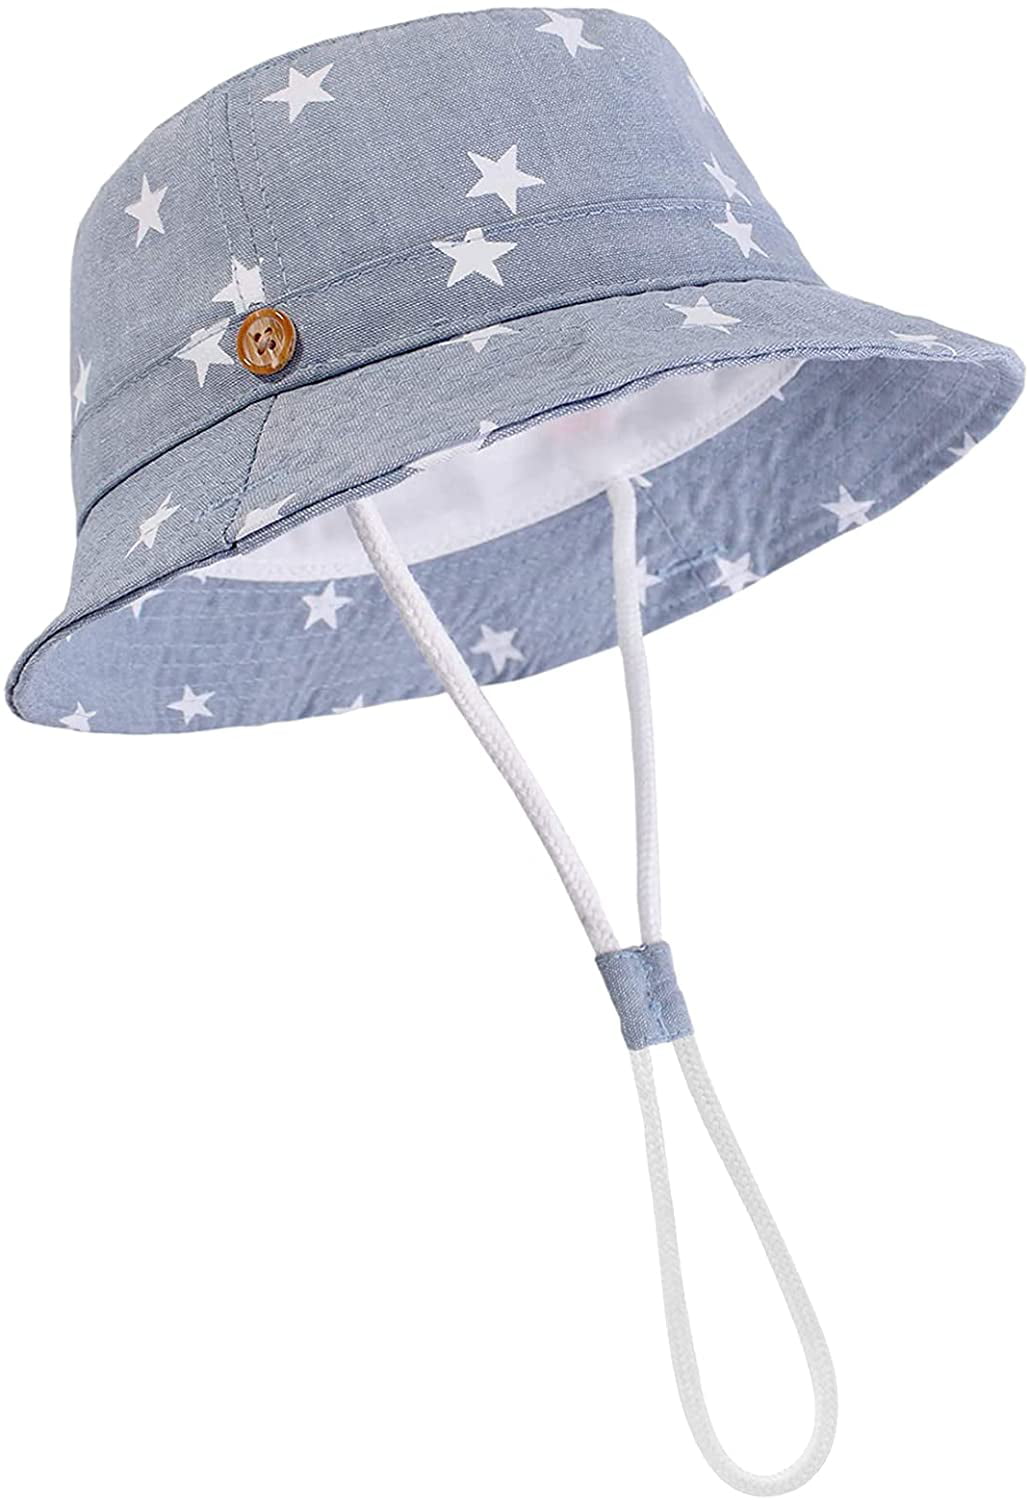 Toddler Wide Brim Bucket Summer Hats Baby Girls Boys Sun Hats Protection Beach UPF 50 